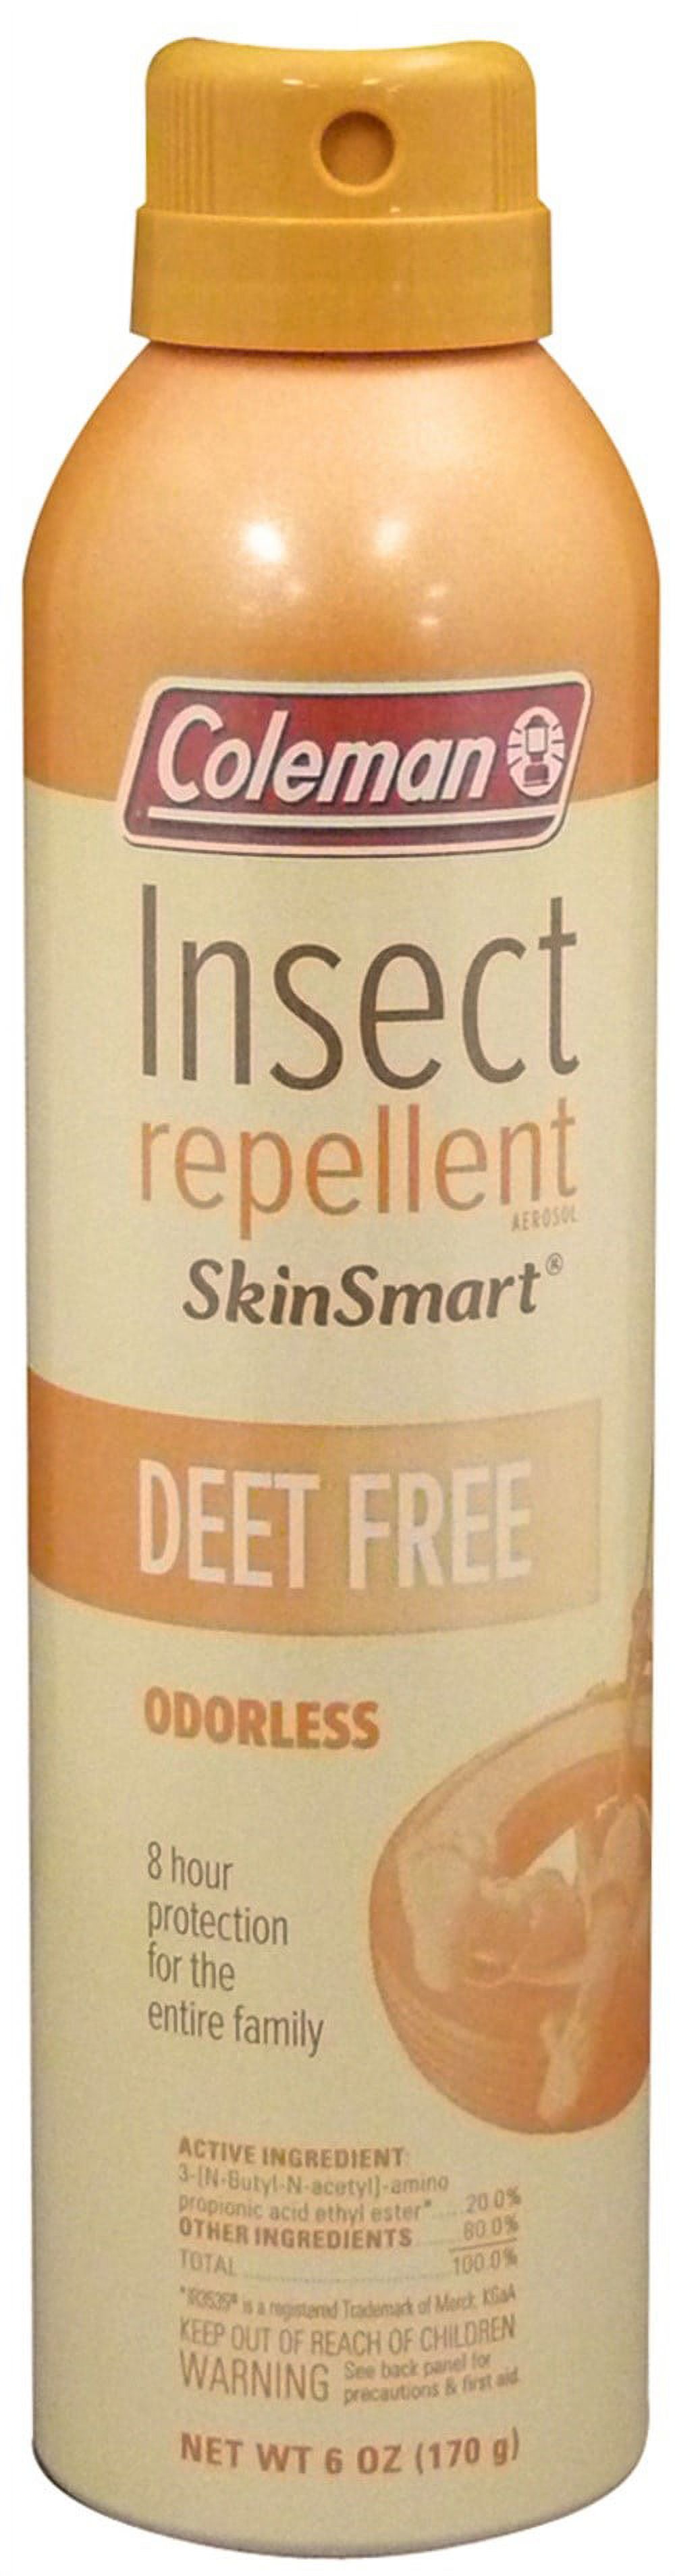 Coleman Deet-Free Skin Smart Insect Repellent, 6 oz - image 3 of 3